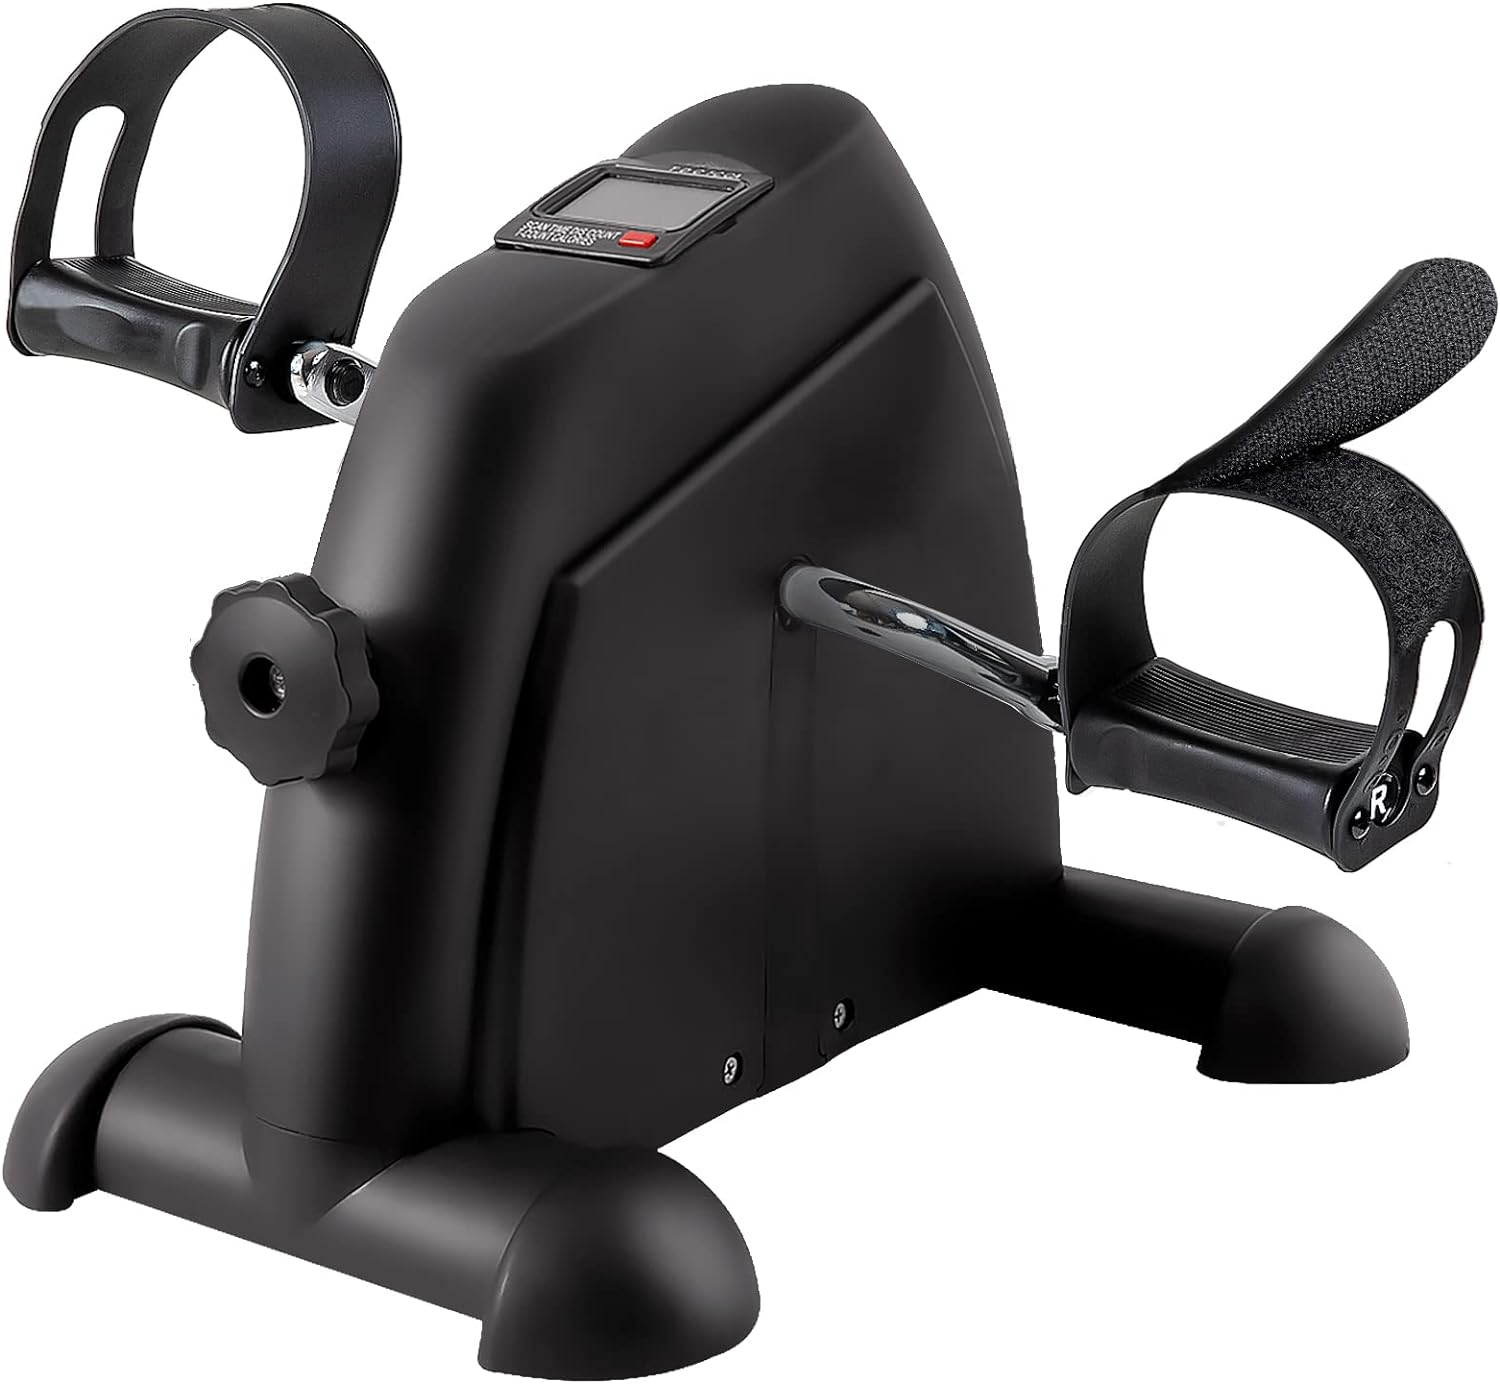 Under Desk Bike Pedal Exerciser - TABEKE Mini Exercise Bike for Arm/Leg Exercise, Pedal Exerciser for Seniors with LCD Display